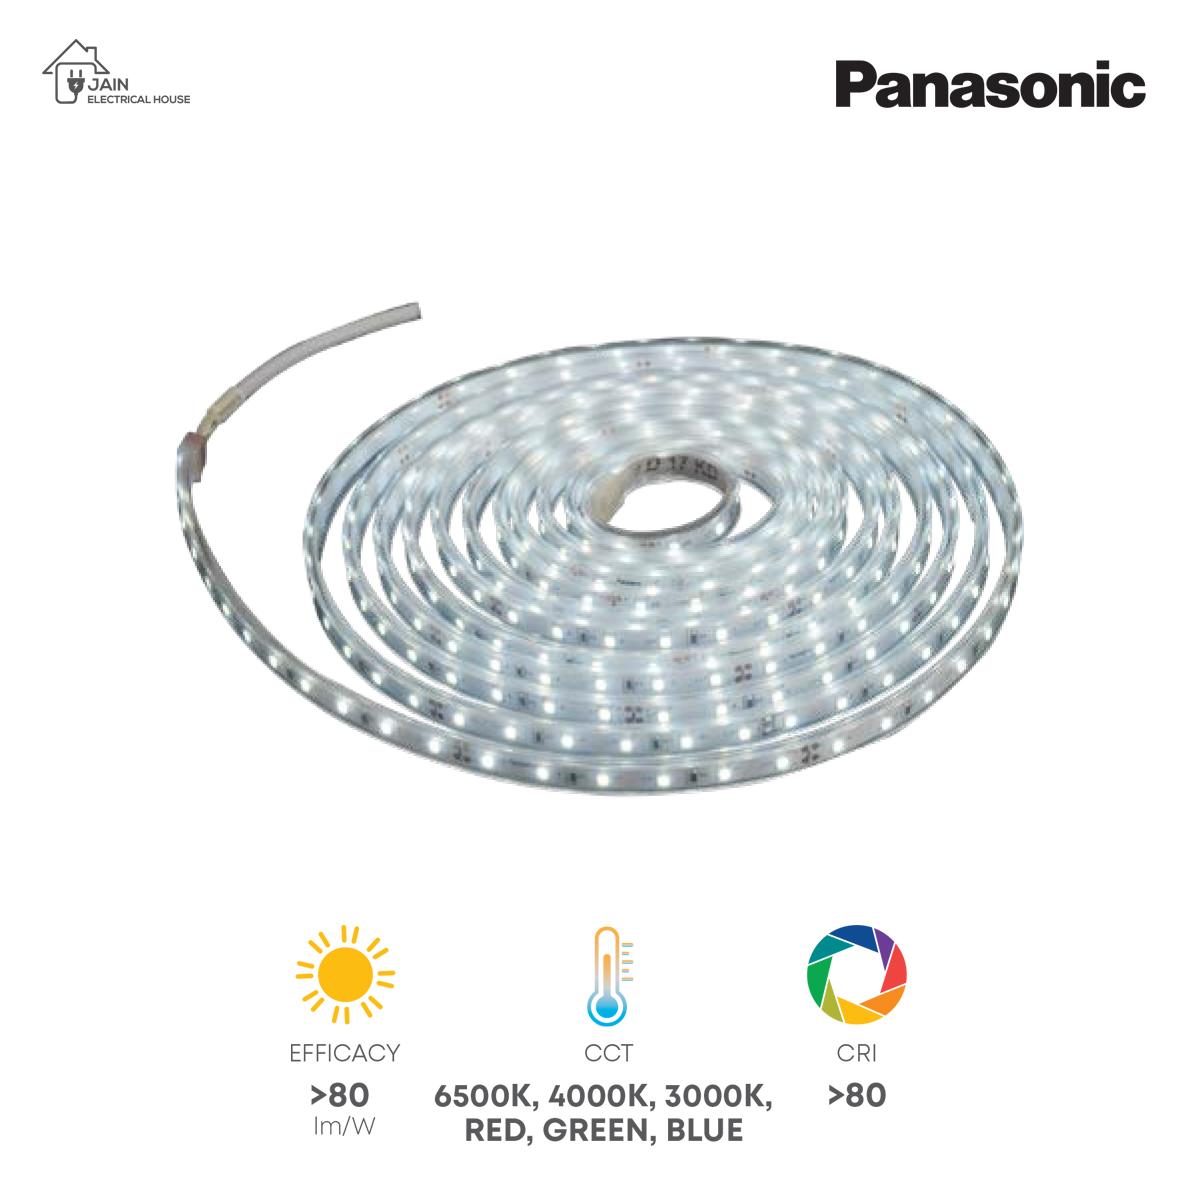 https://jainelectricalhouse.com/wp-content/uploads/2022/06/Panasonic-Strip-Light.jpg